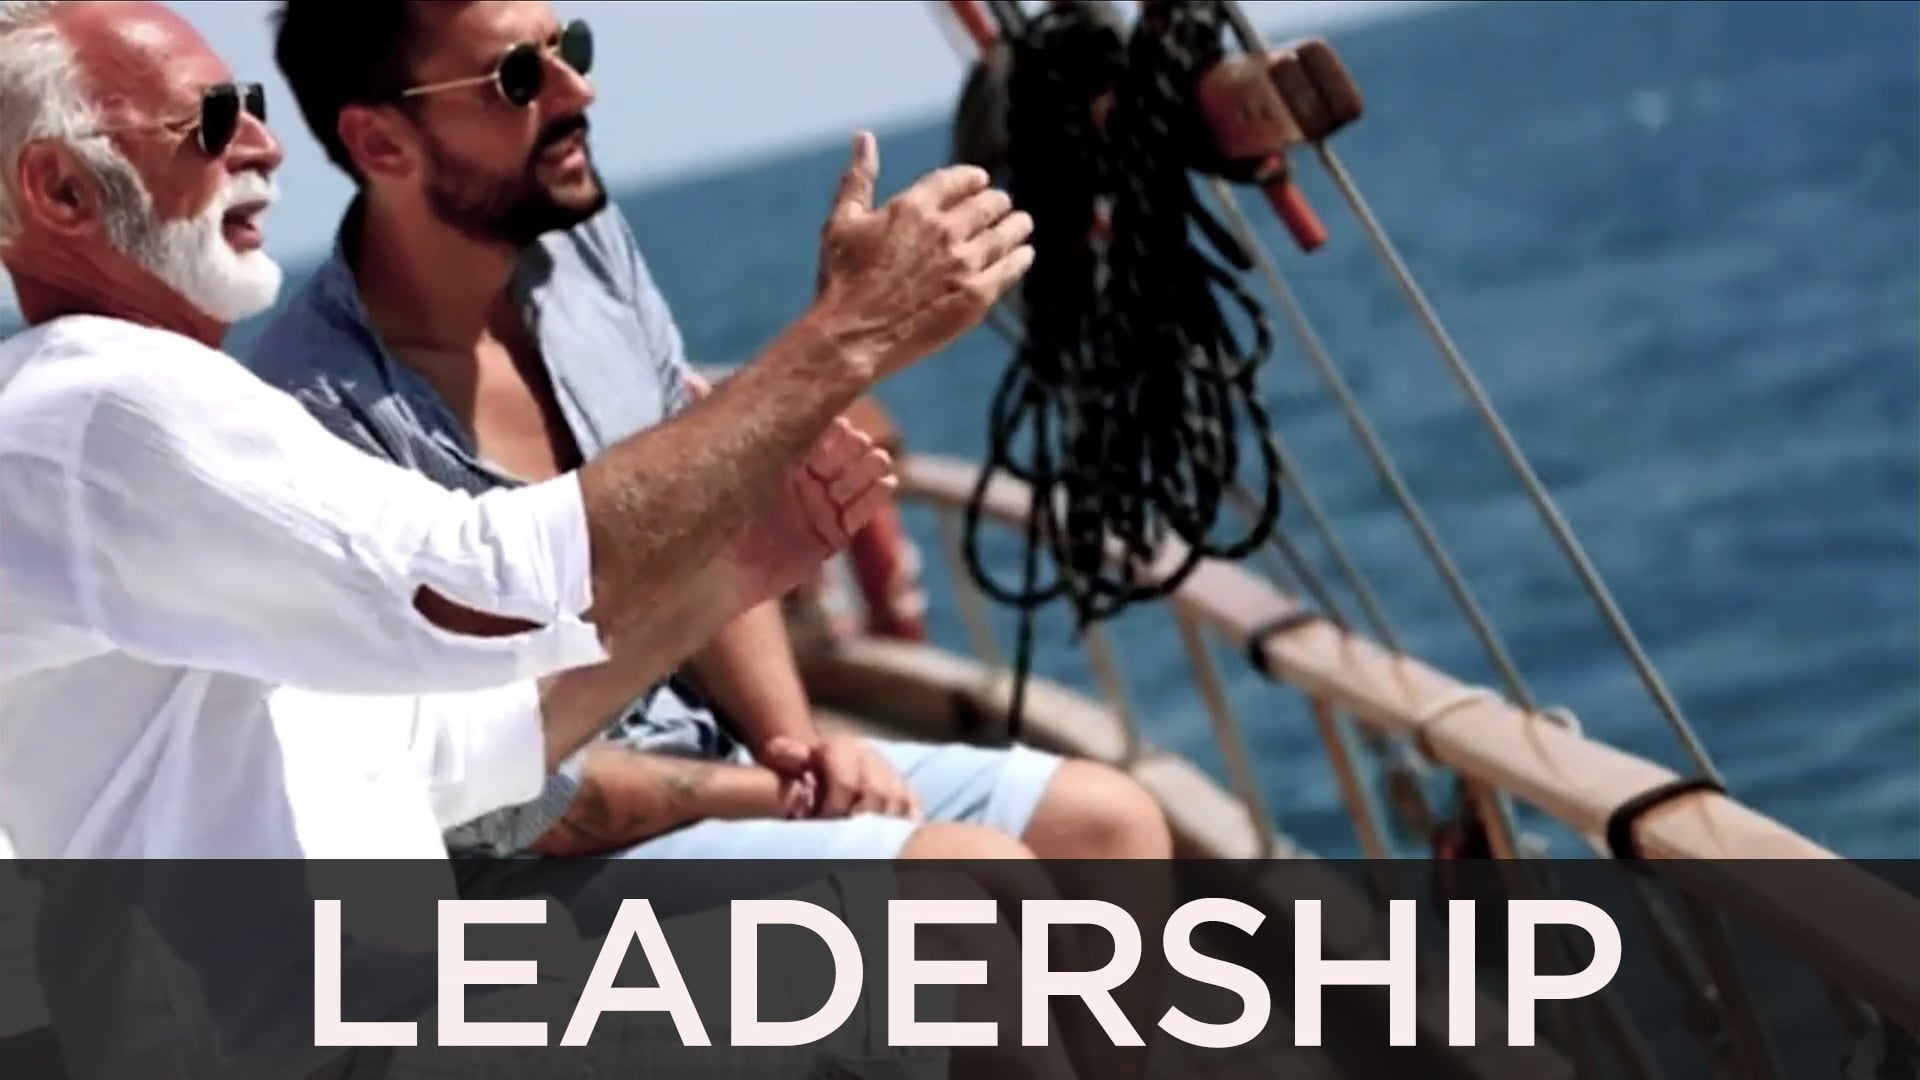 Leadership principles Part 1